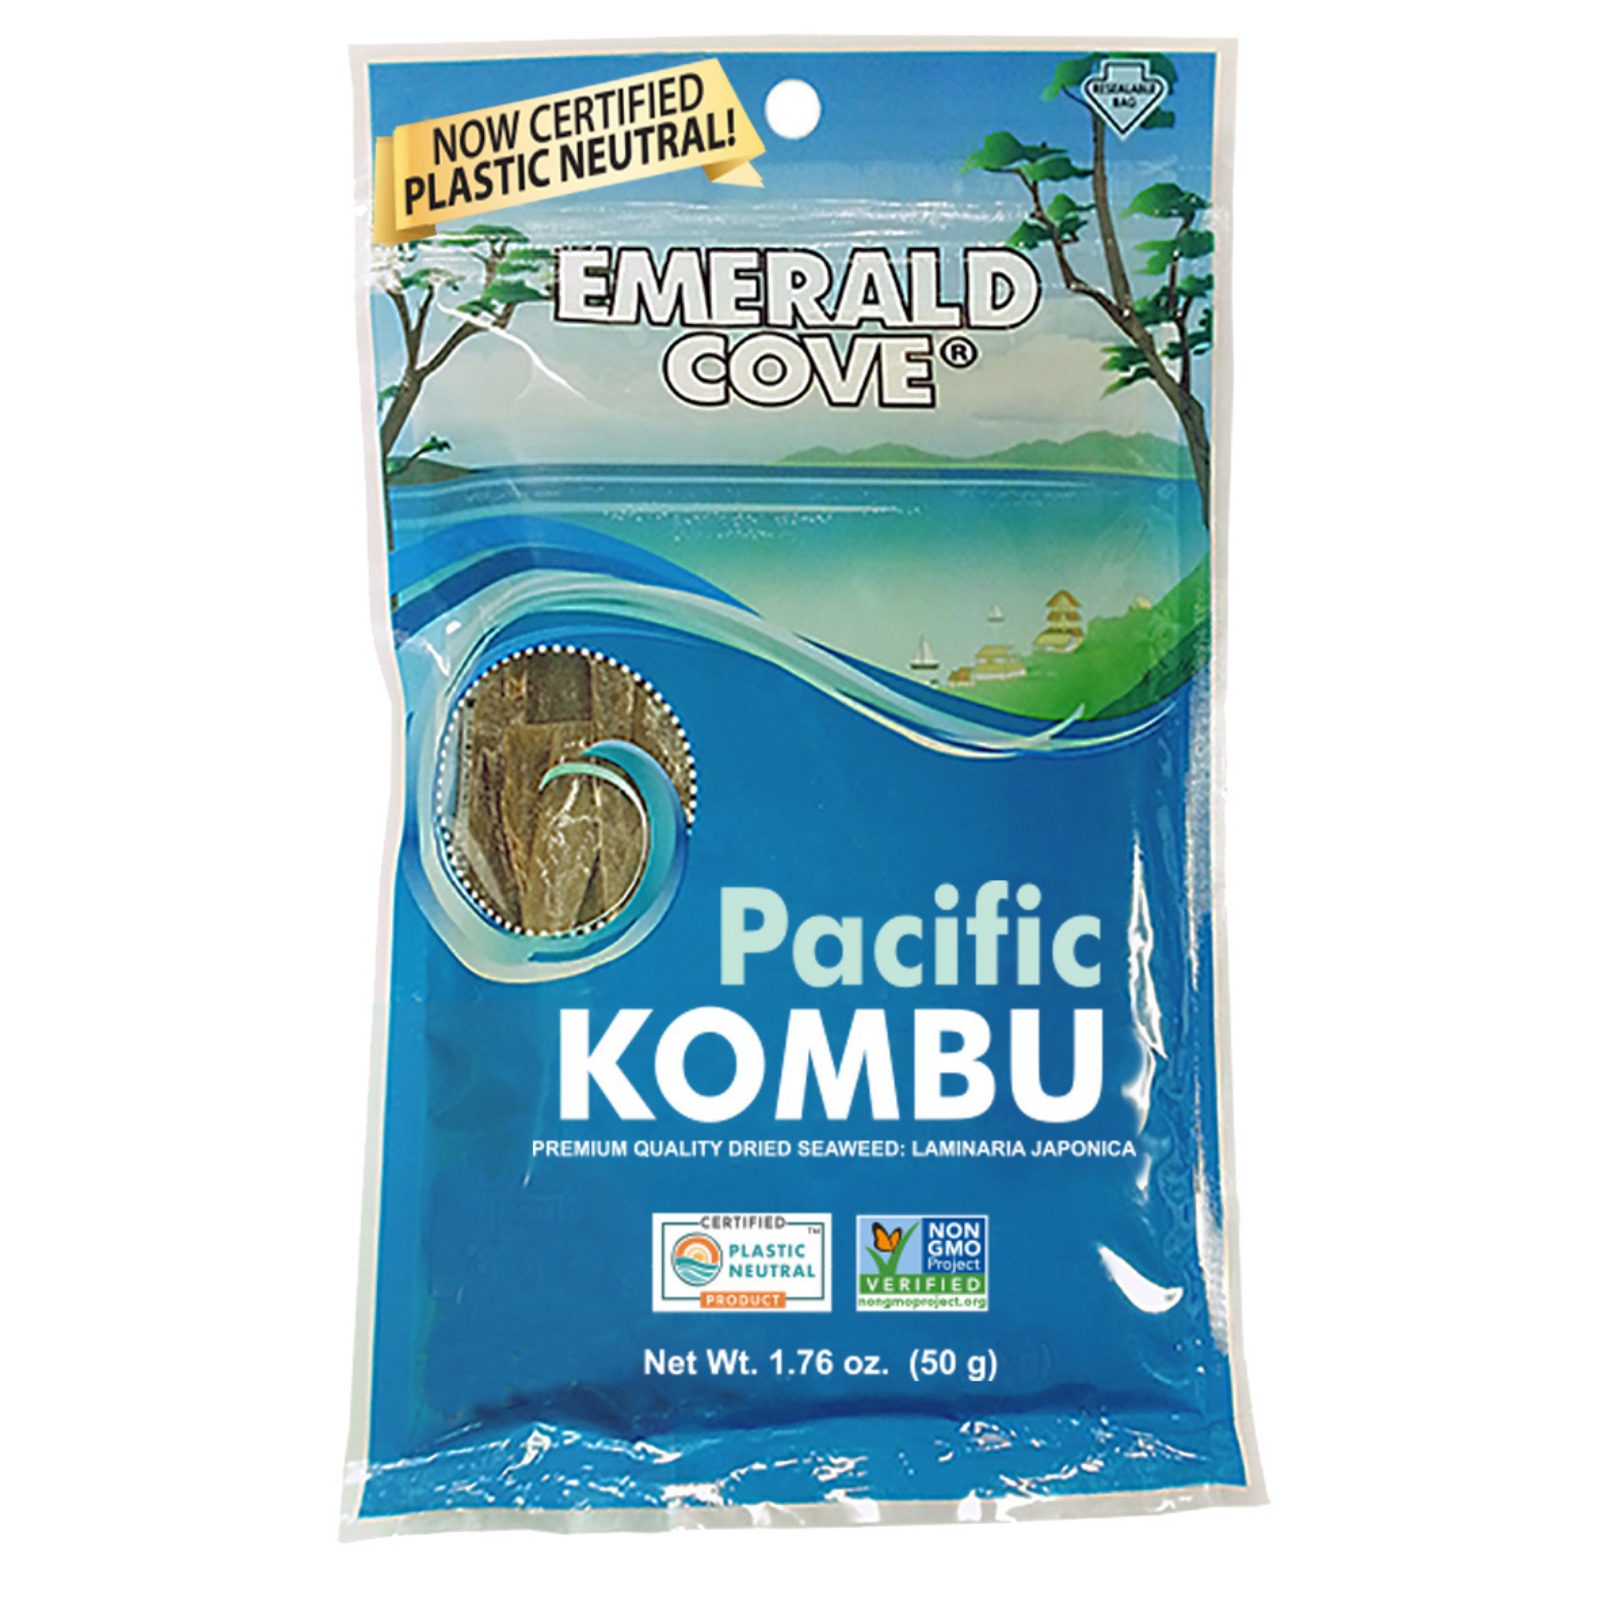 Emerald Cove Pacific Kombu | Dried Seaweed | Kelp | Non-GMO, Vegan, Plastic Neutral | Resealable Bag | 1.76 OZ - image 1 of 7